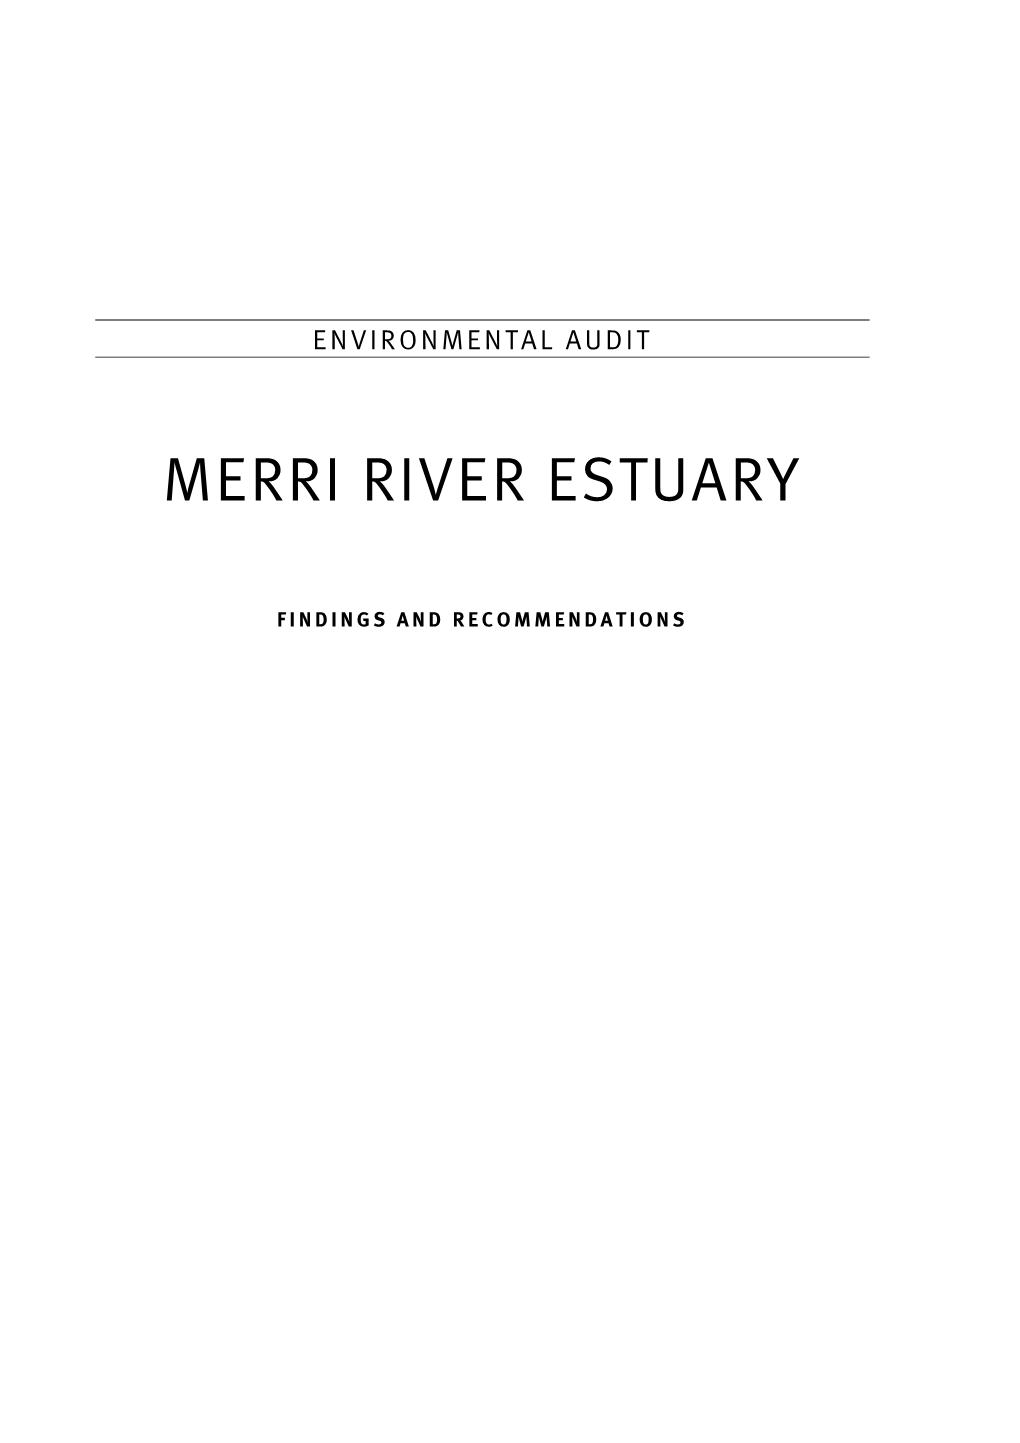 Merri River Estuary